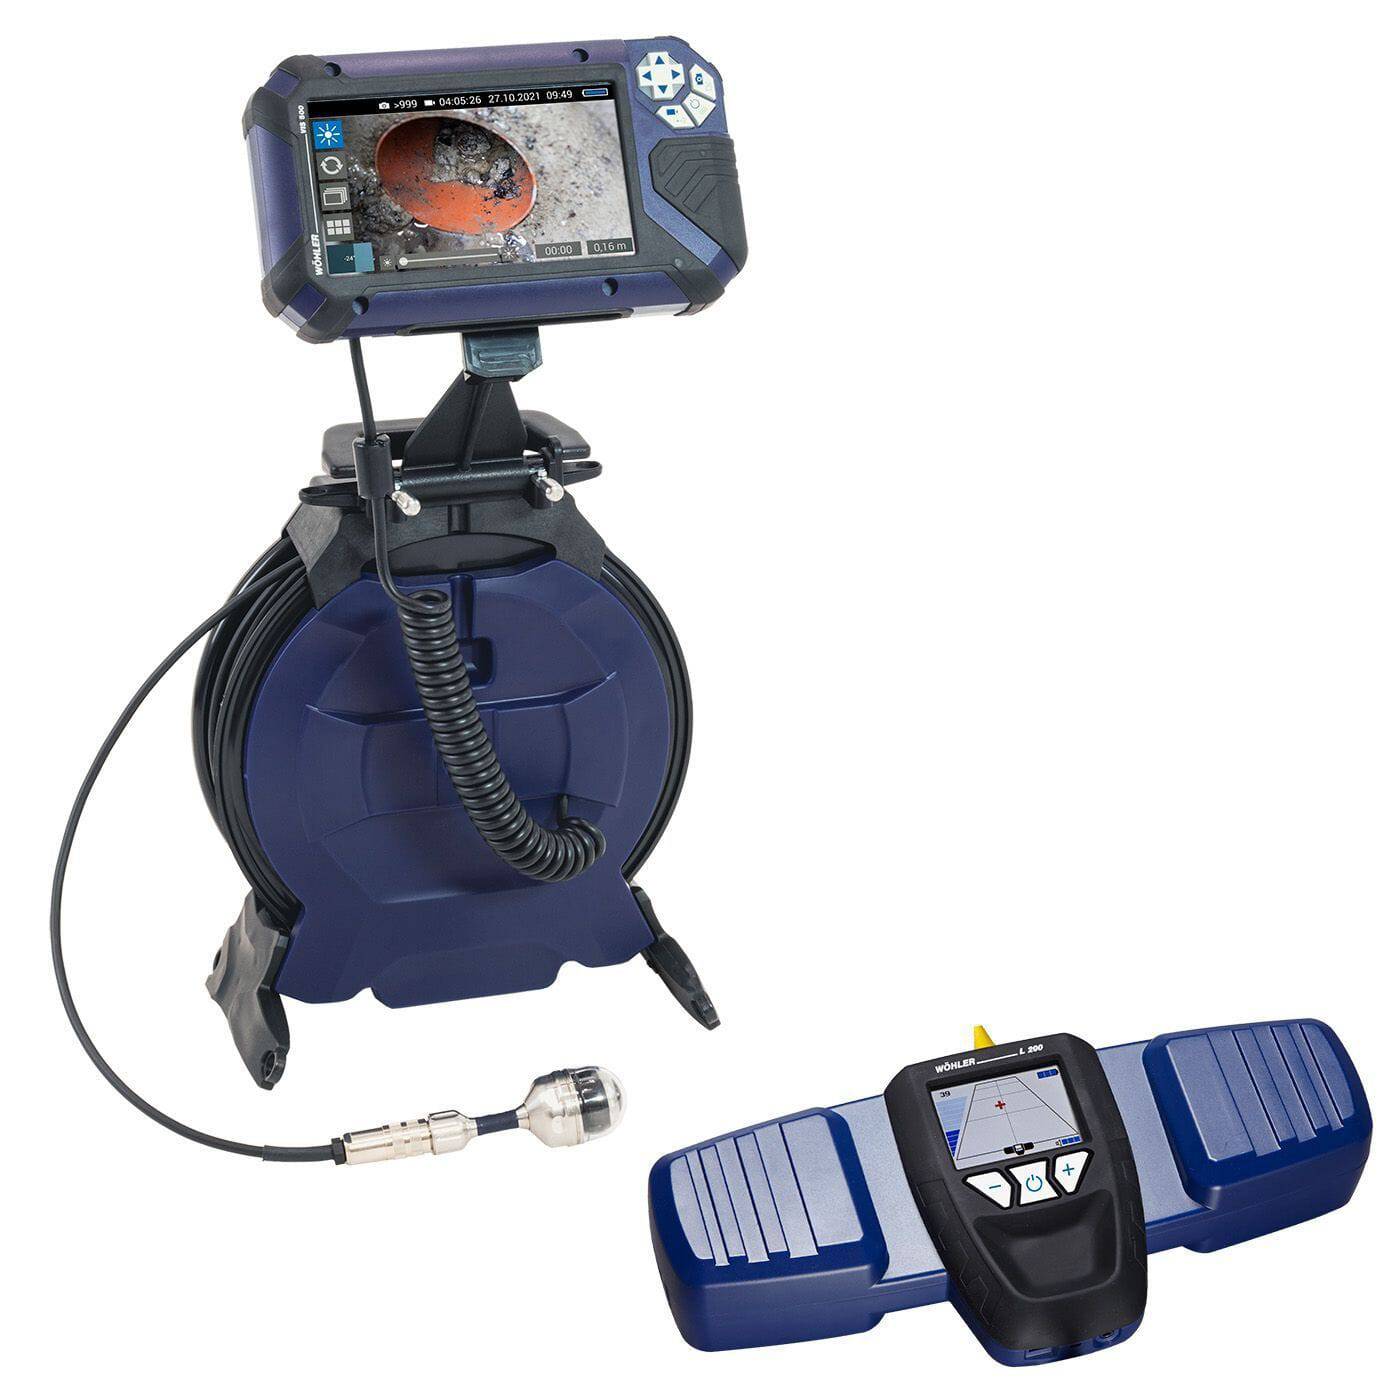 Wohler VIS 500 PLUS Camera Inspection System w/ 1.5" & 1" Camera Head and Locator - 11304 - InterTest, Inc.